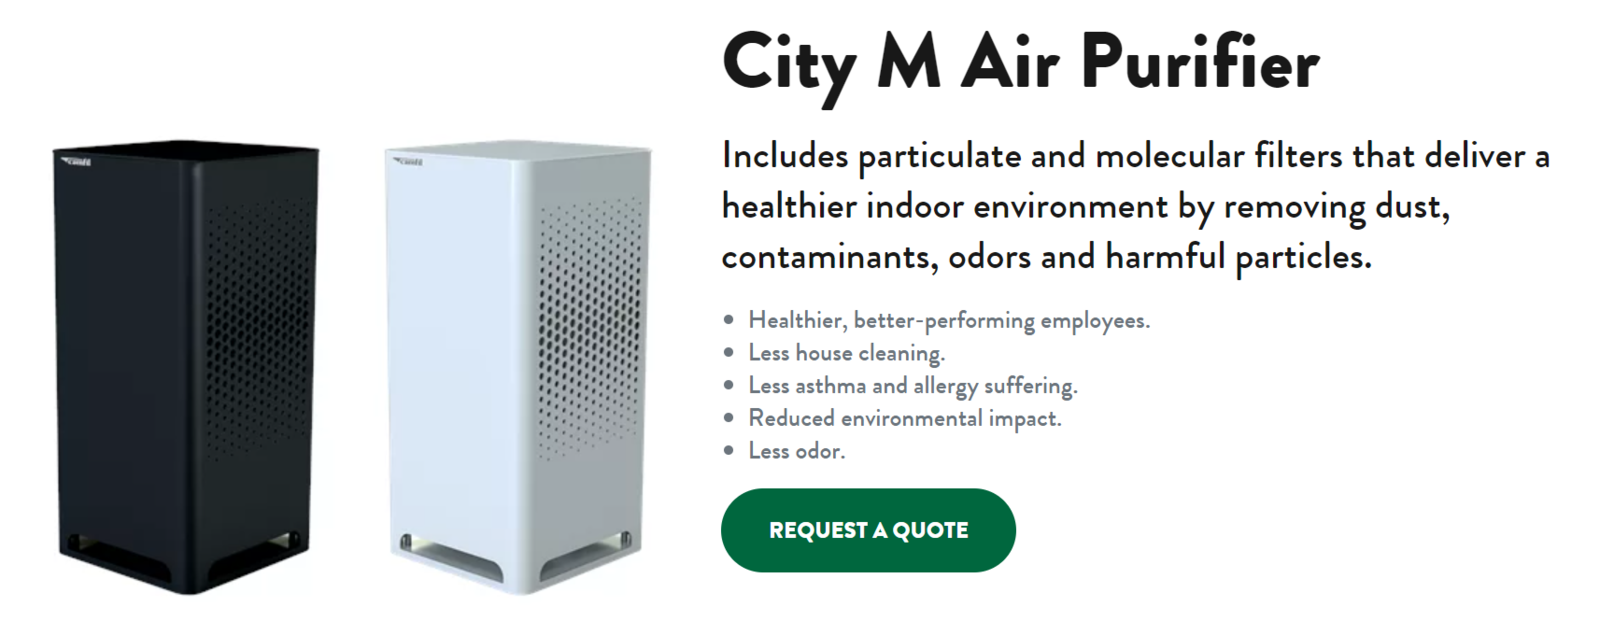 Air Cleaner Case Study Camfil Brings Clean Air to the Home